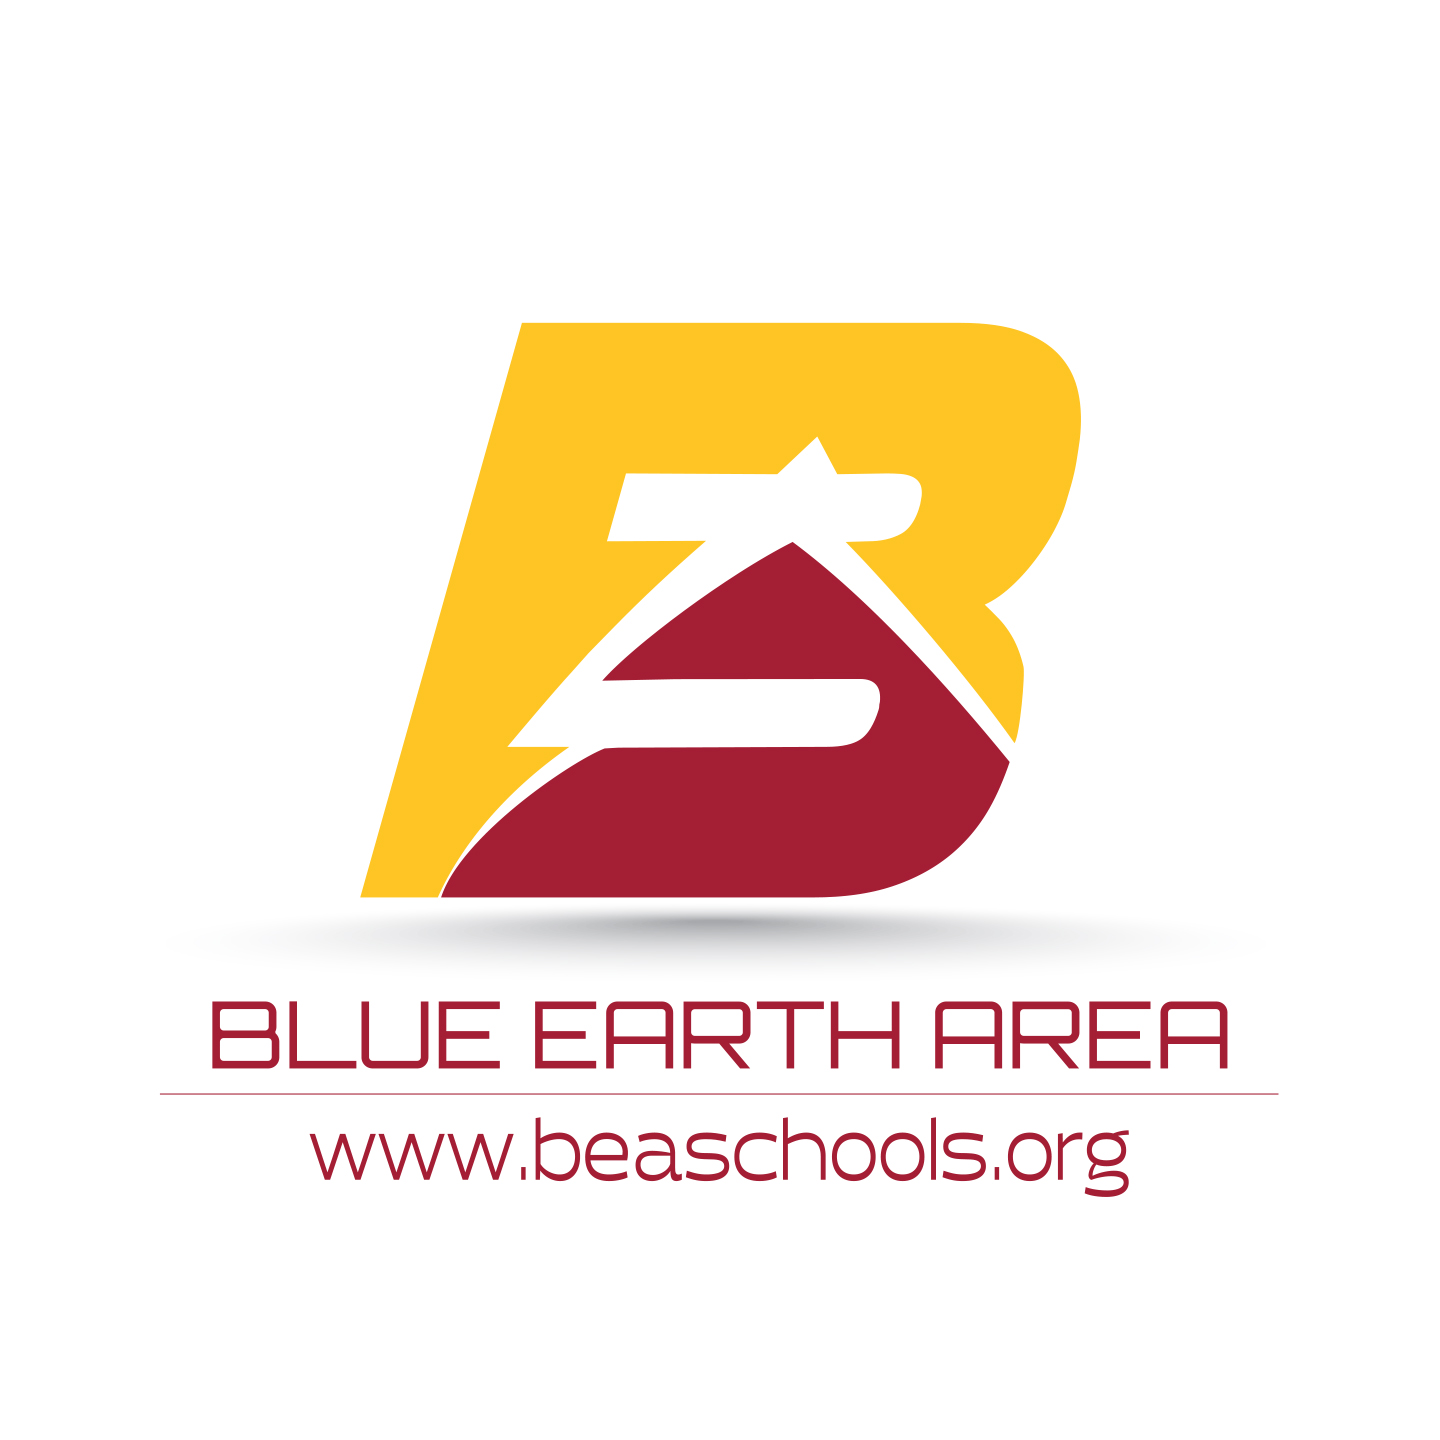 BEA Logo